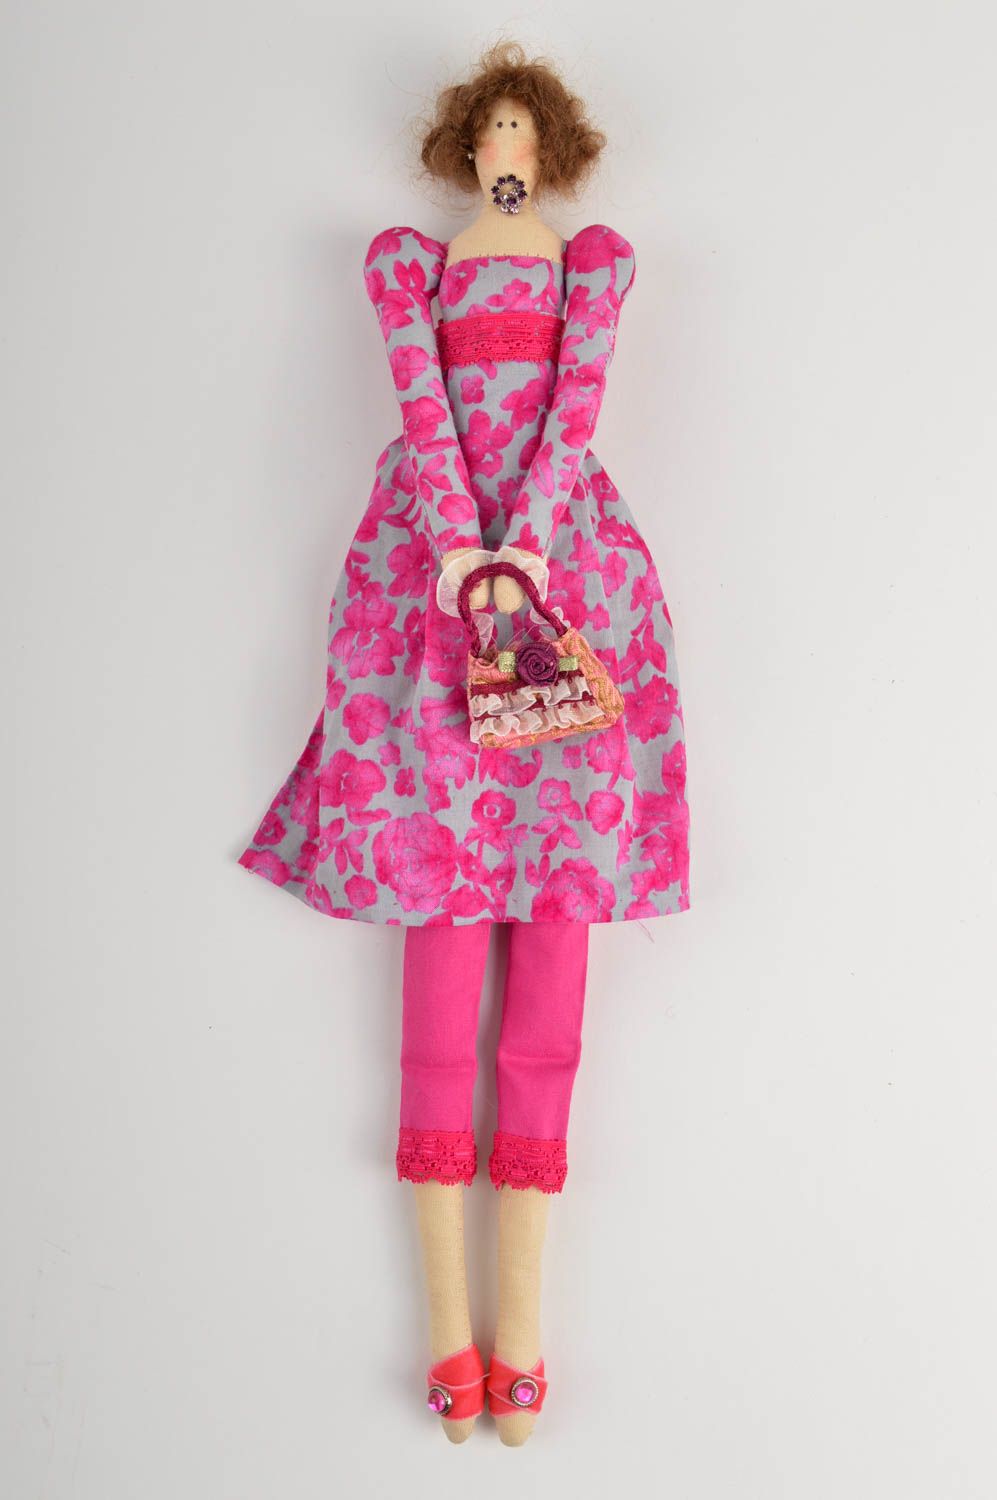 Handmade doll in pink dress stuffed toy designer childrens toy decoration ideas photo 2